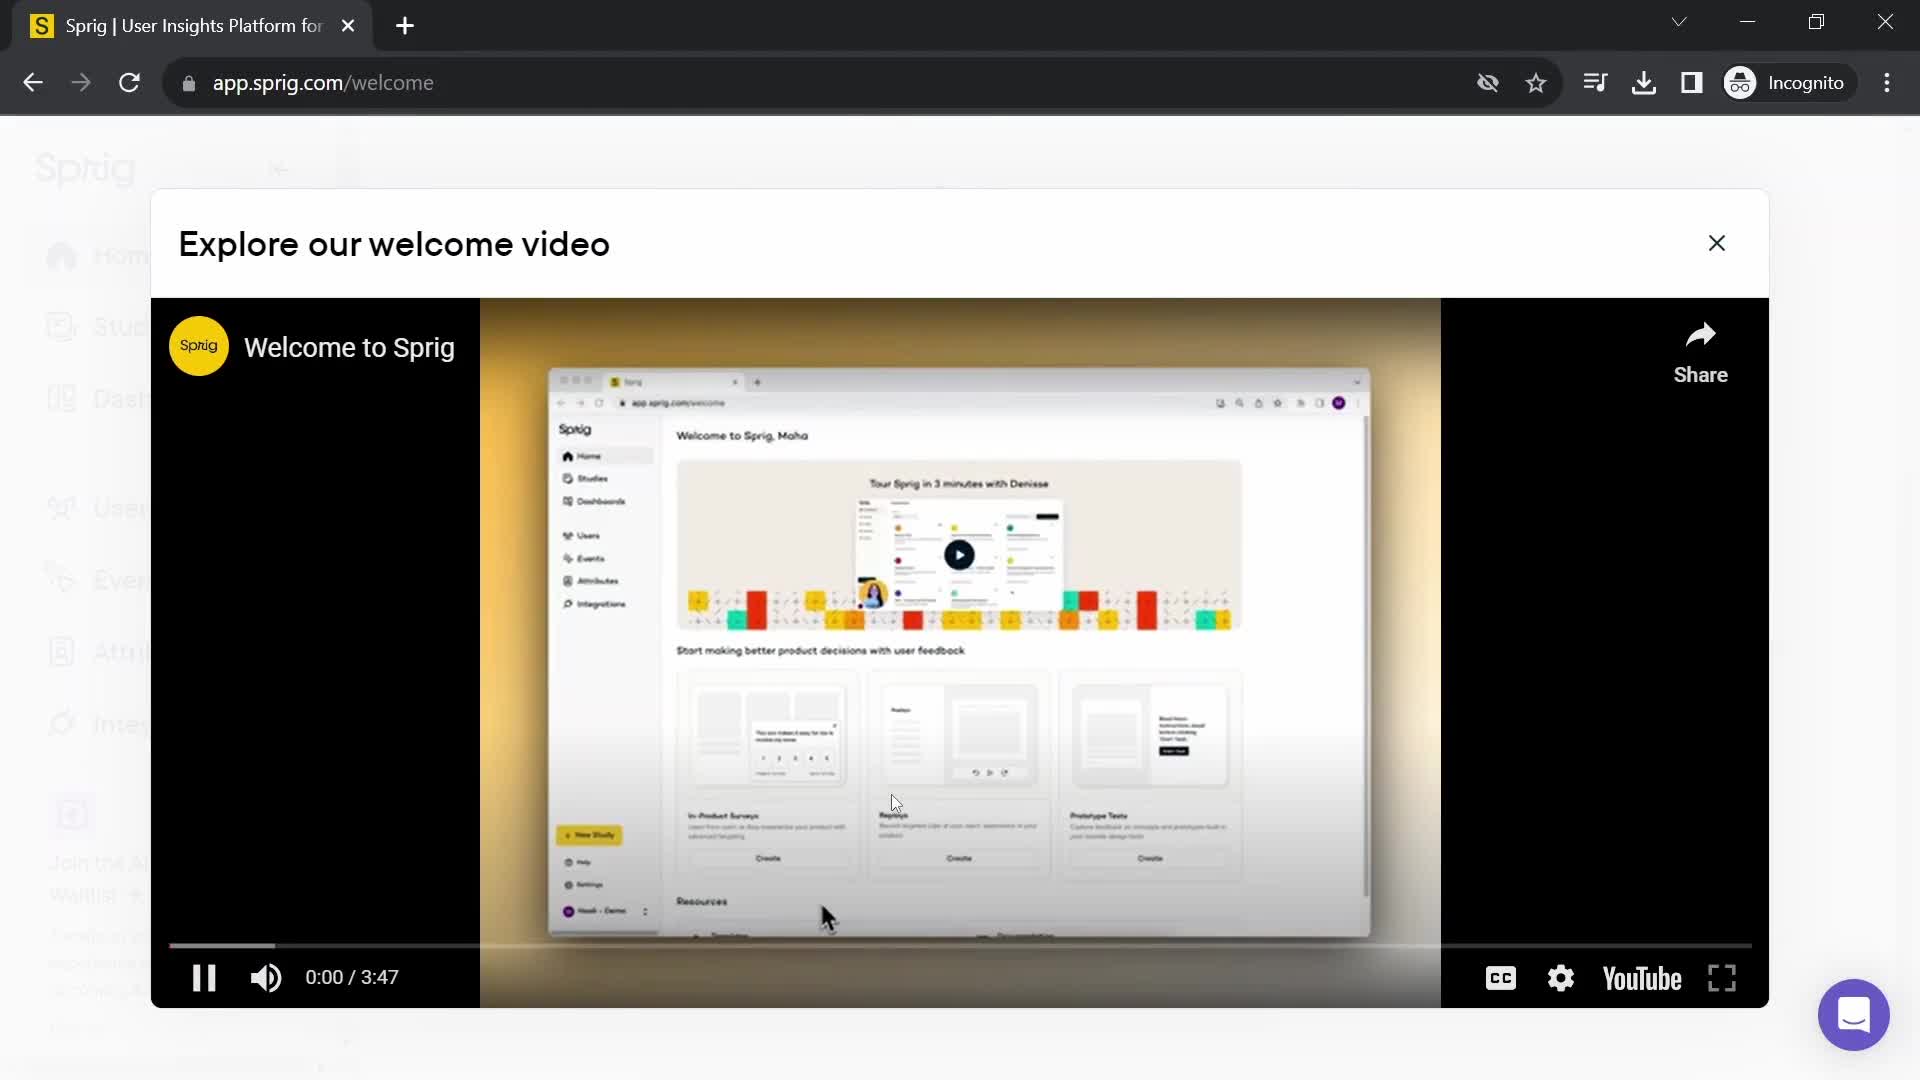 Screenshot of Welcome video on General browsing on Sprig user flow